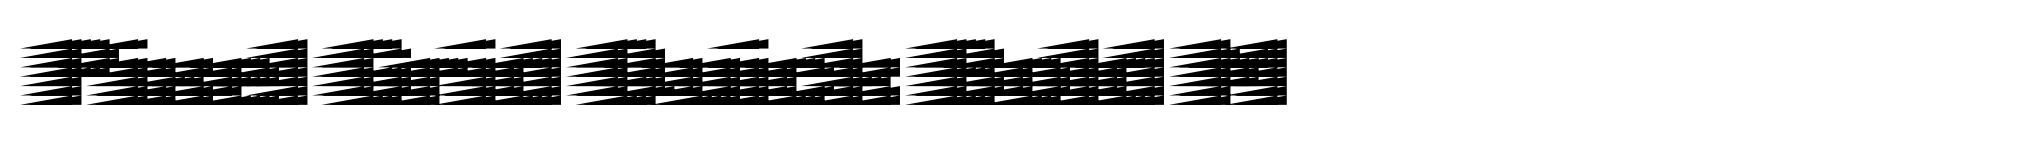 Pixel Grid Quick Bold M image